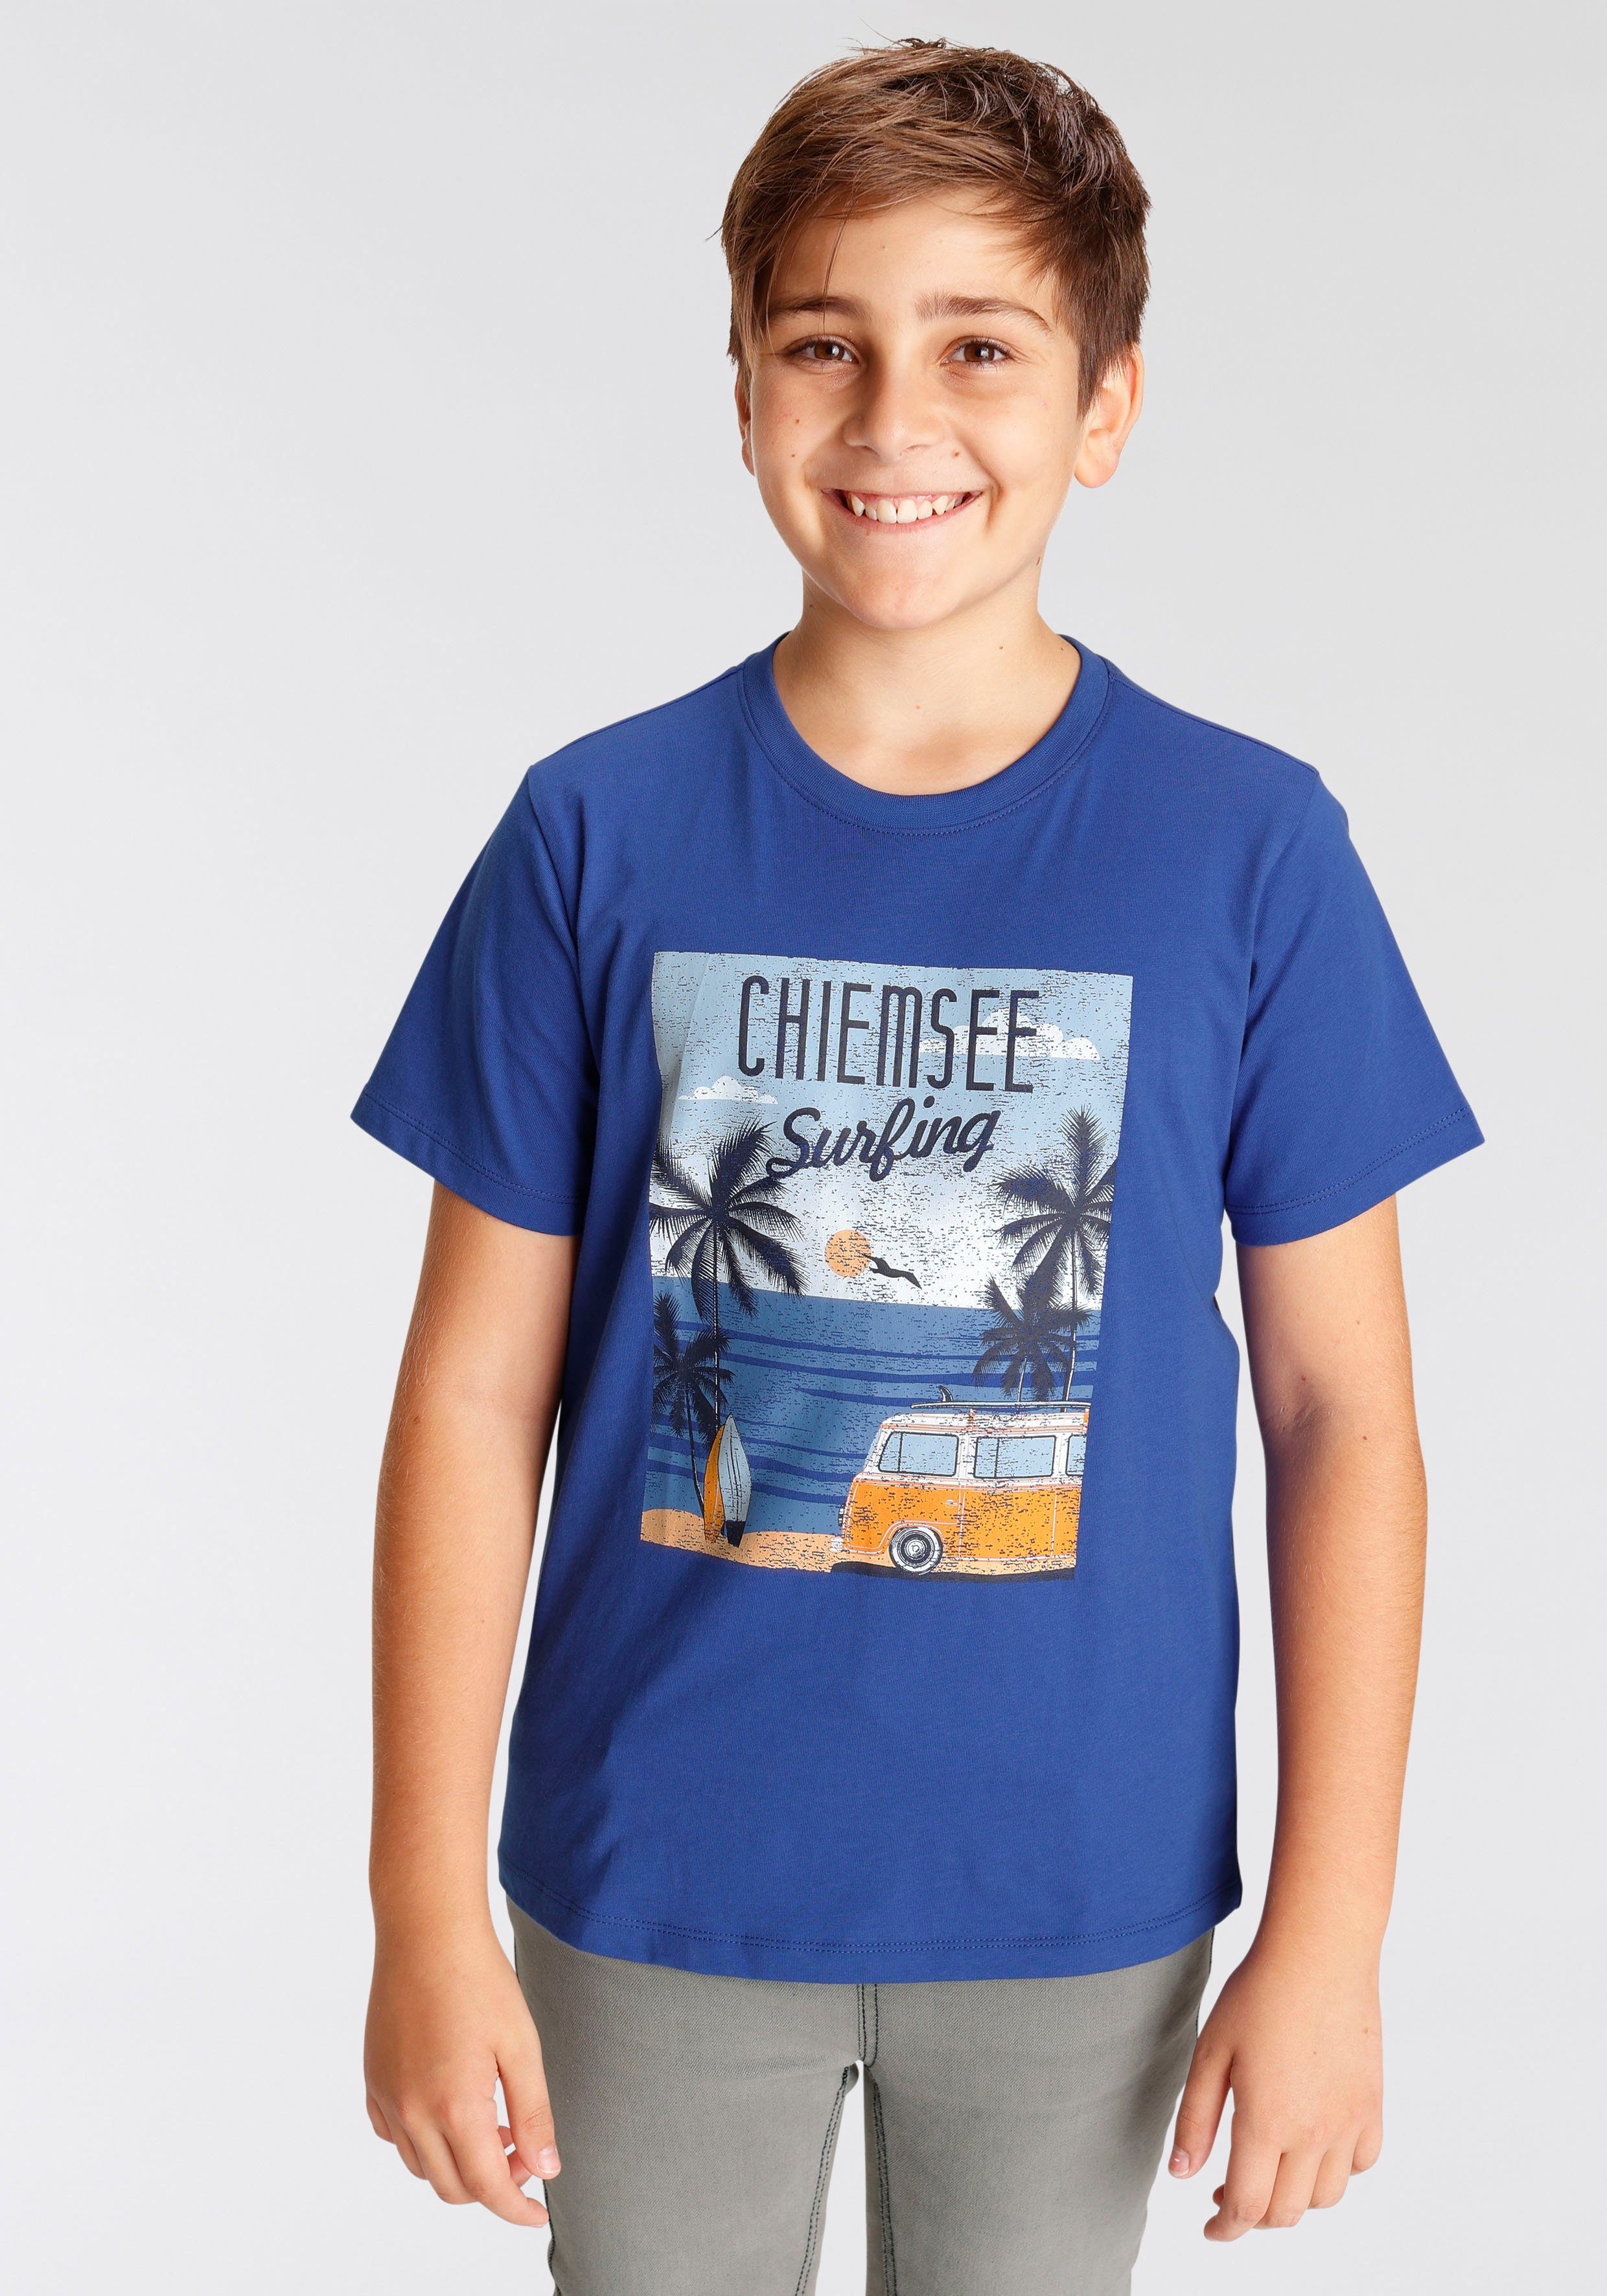 Surfing T-Shirt Chiemsee